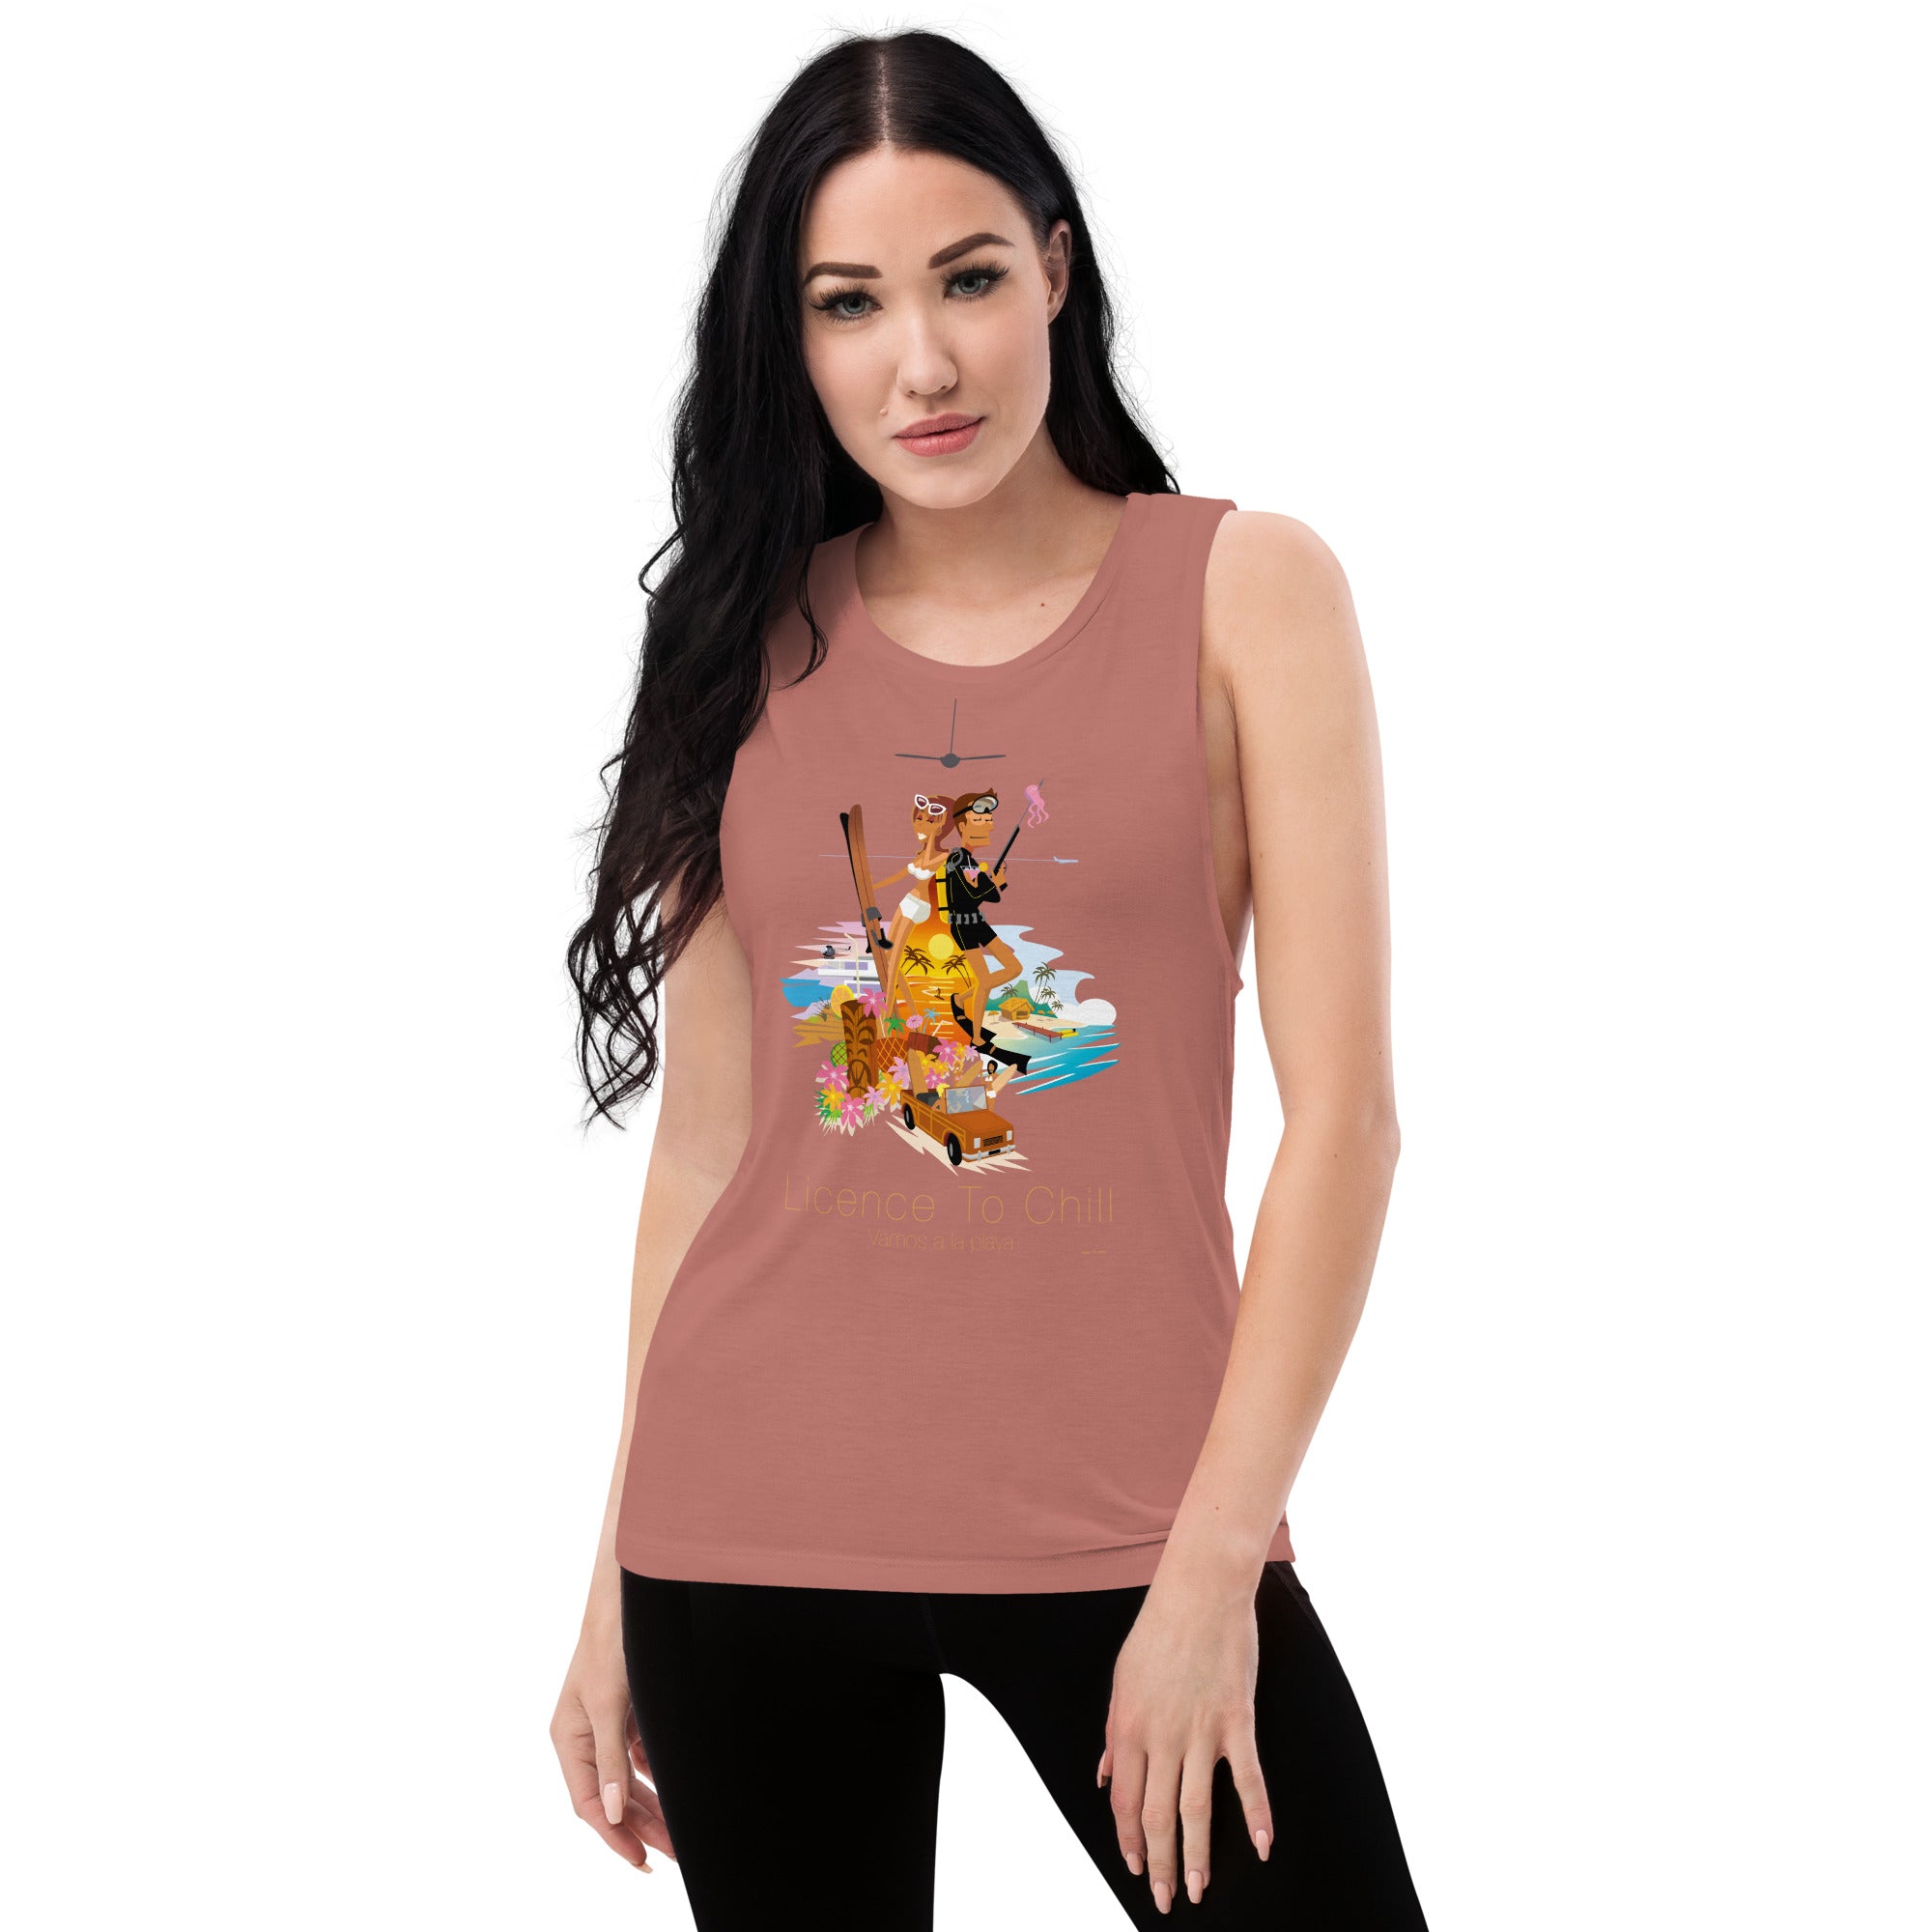 T-Shirt sans manches pour Femme License to Chill Vamos a la Playa